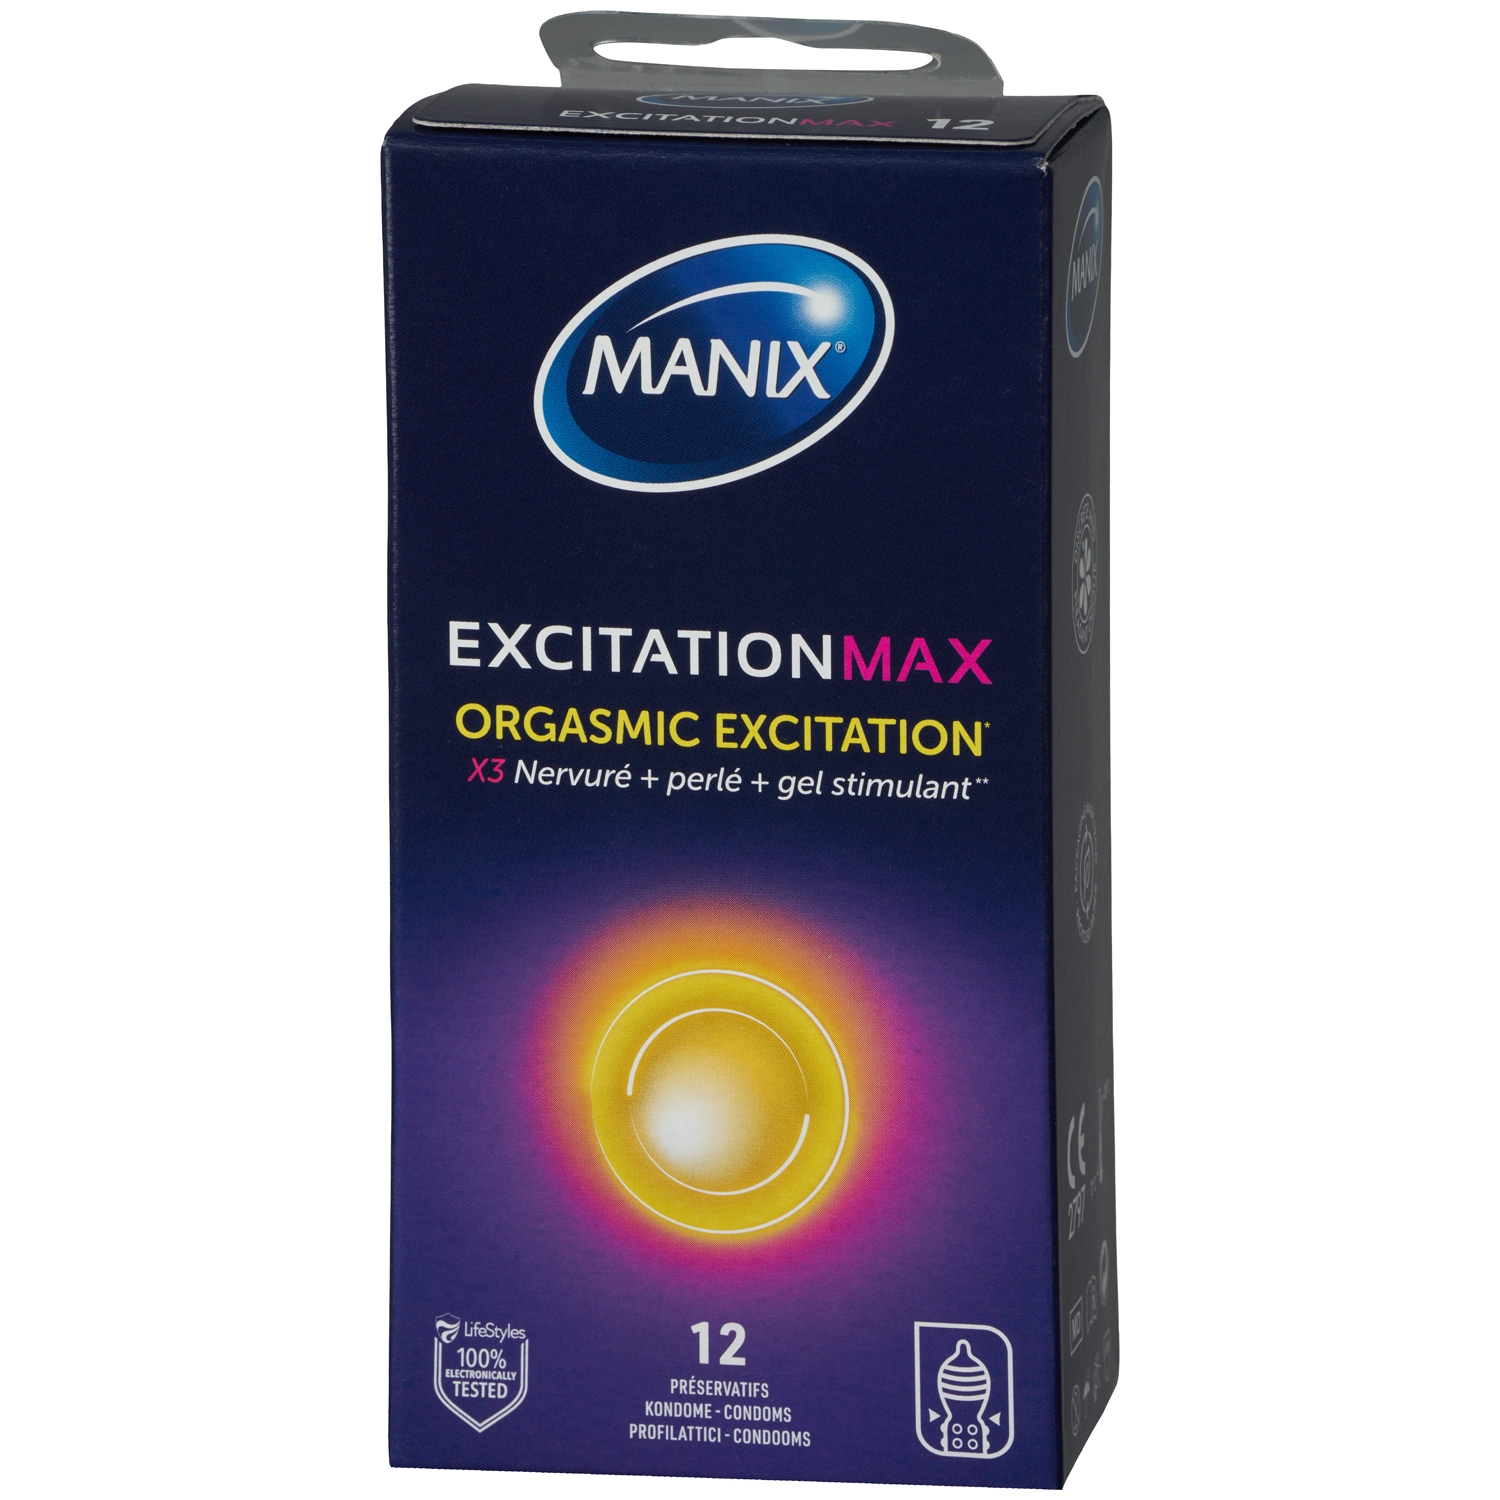 Manix Manix Excitationmax Orgasmic Excitation 12 stk - Klar